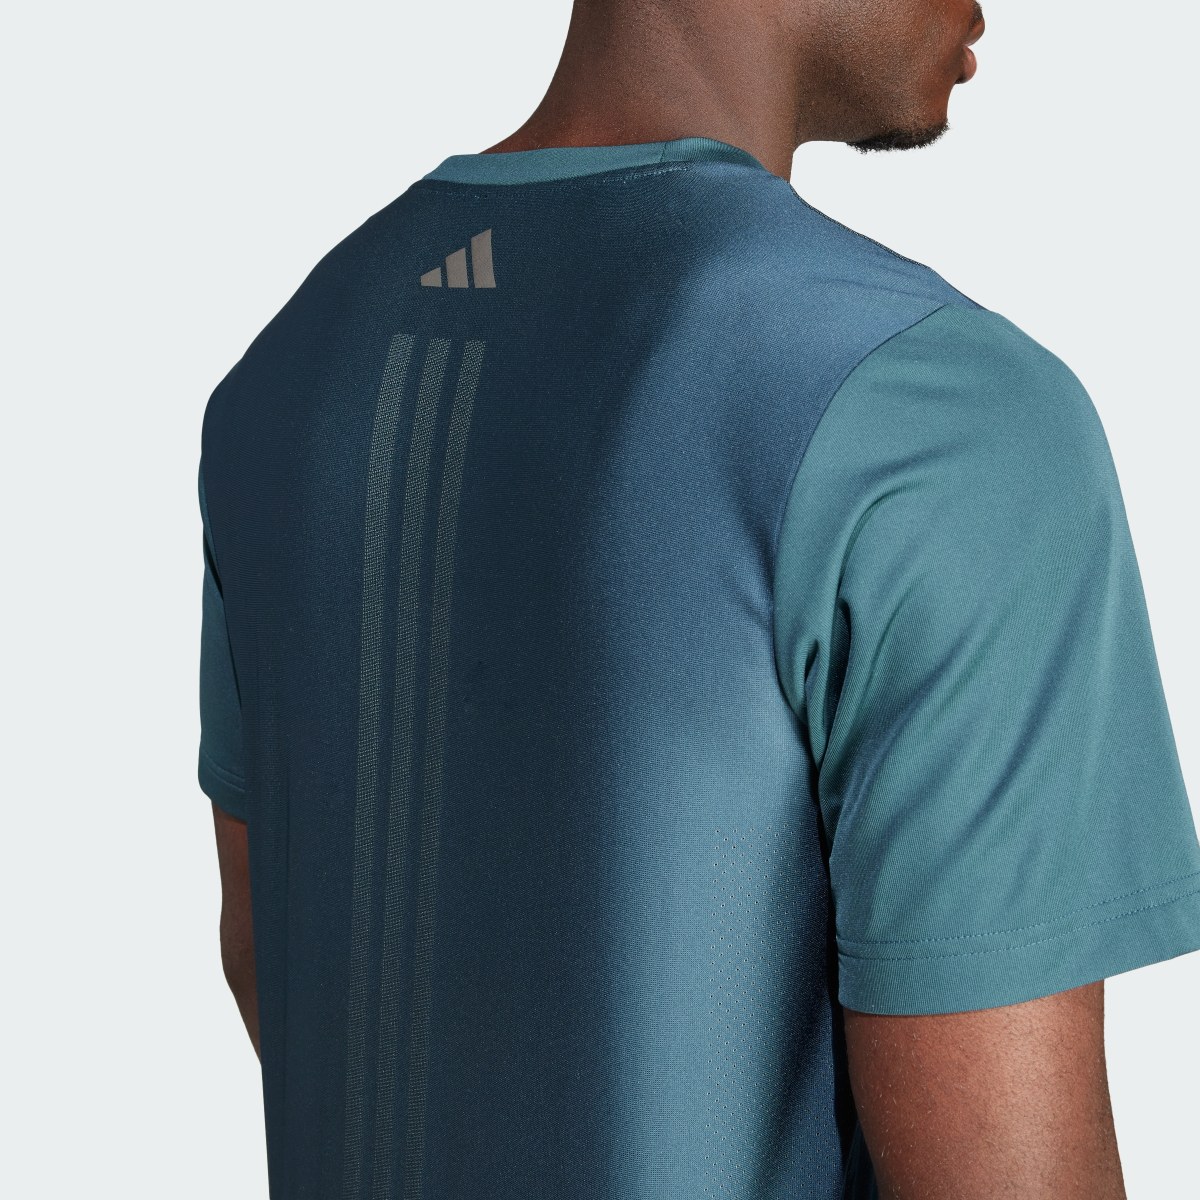 Adidas Camiseta HIIT Workout 3 bandas. 7